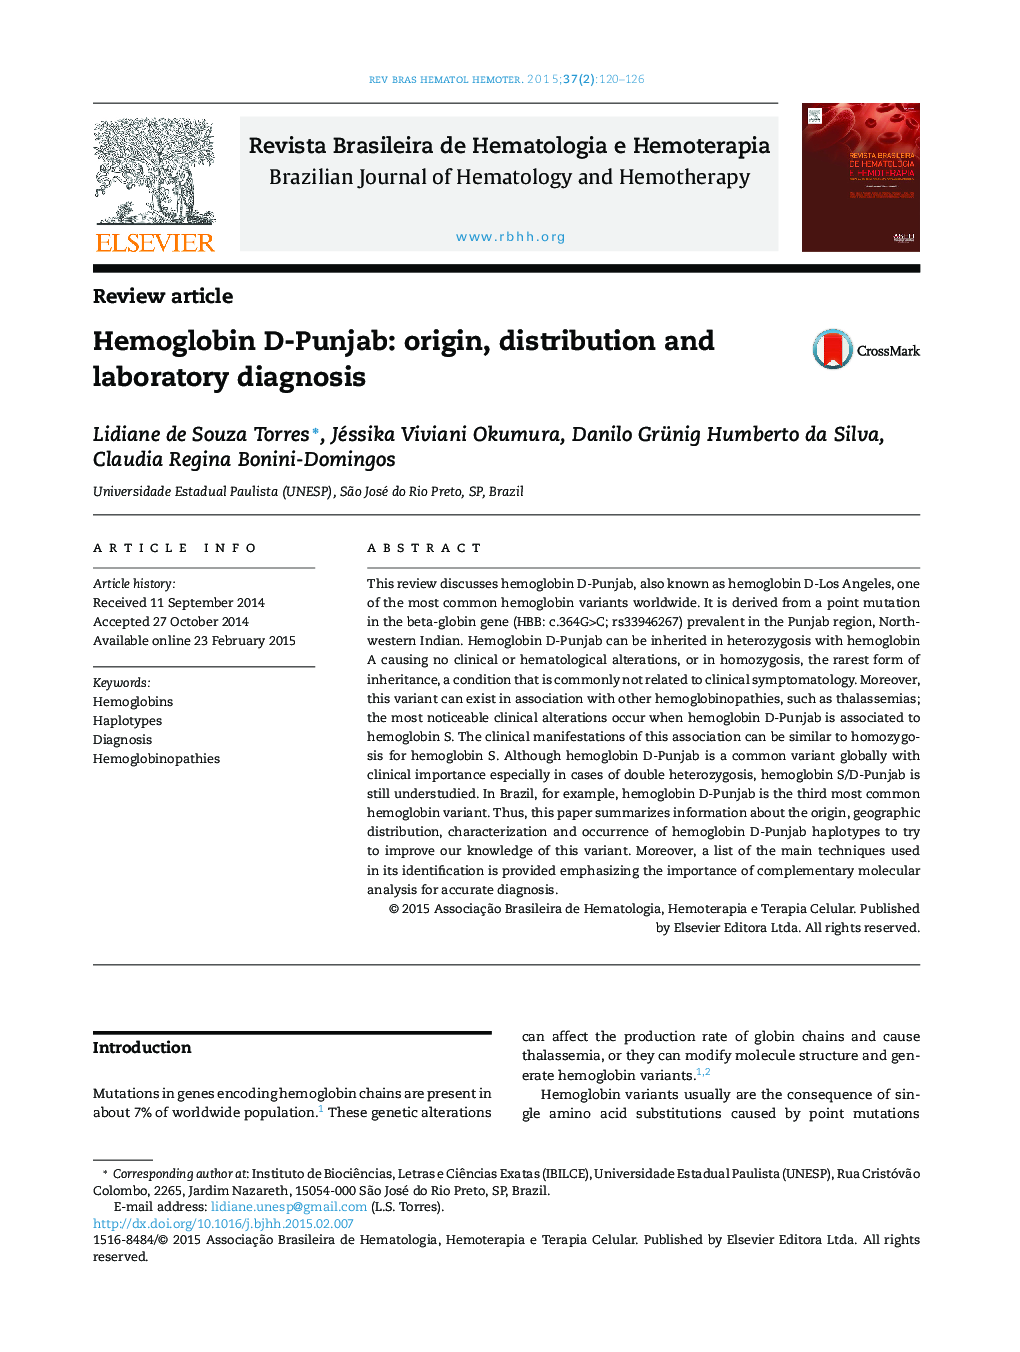 Hemoglobin D-Punjab: origin, distribution and laboratory diagnosis